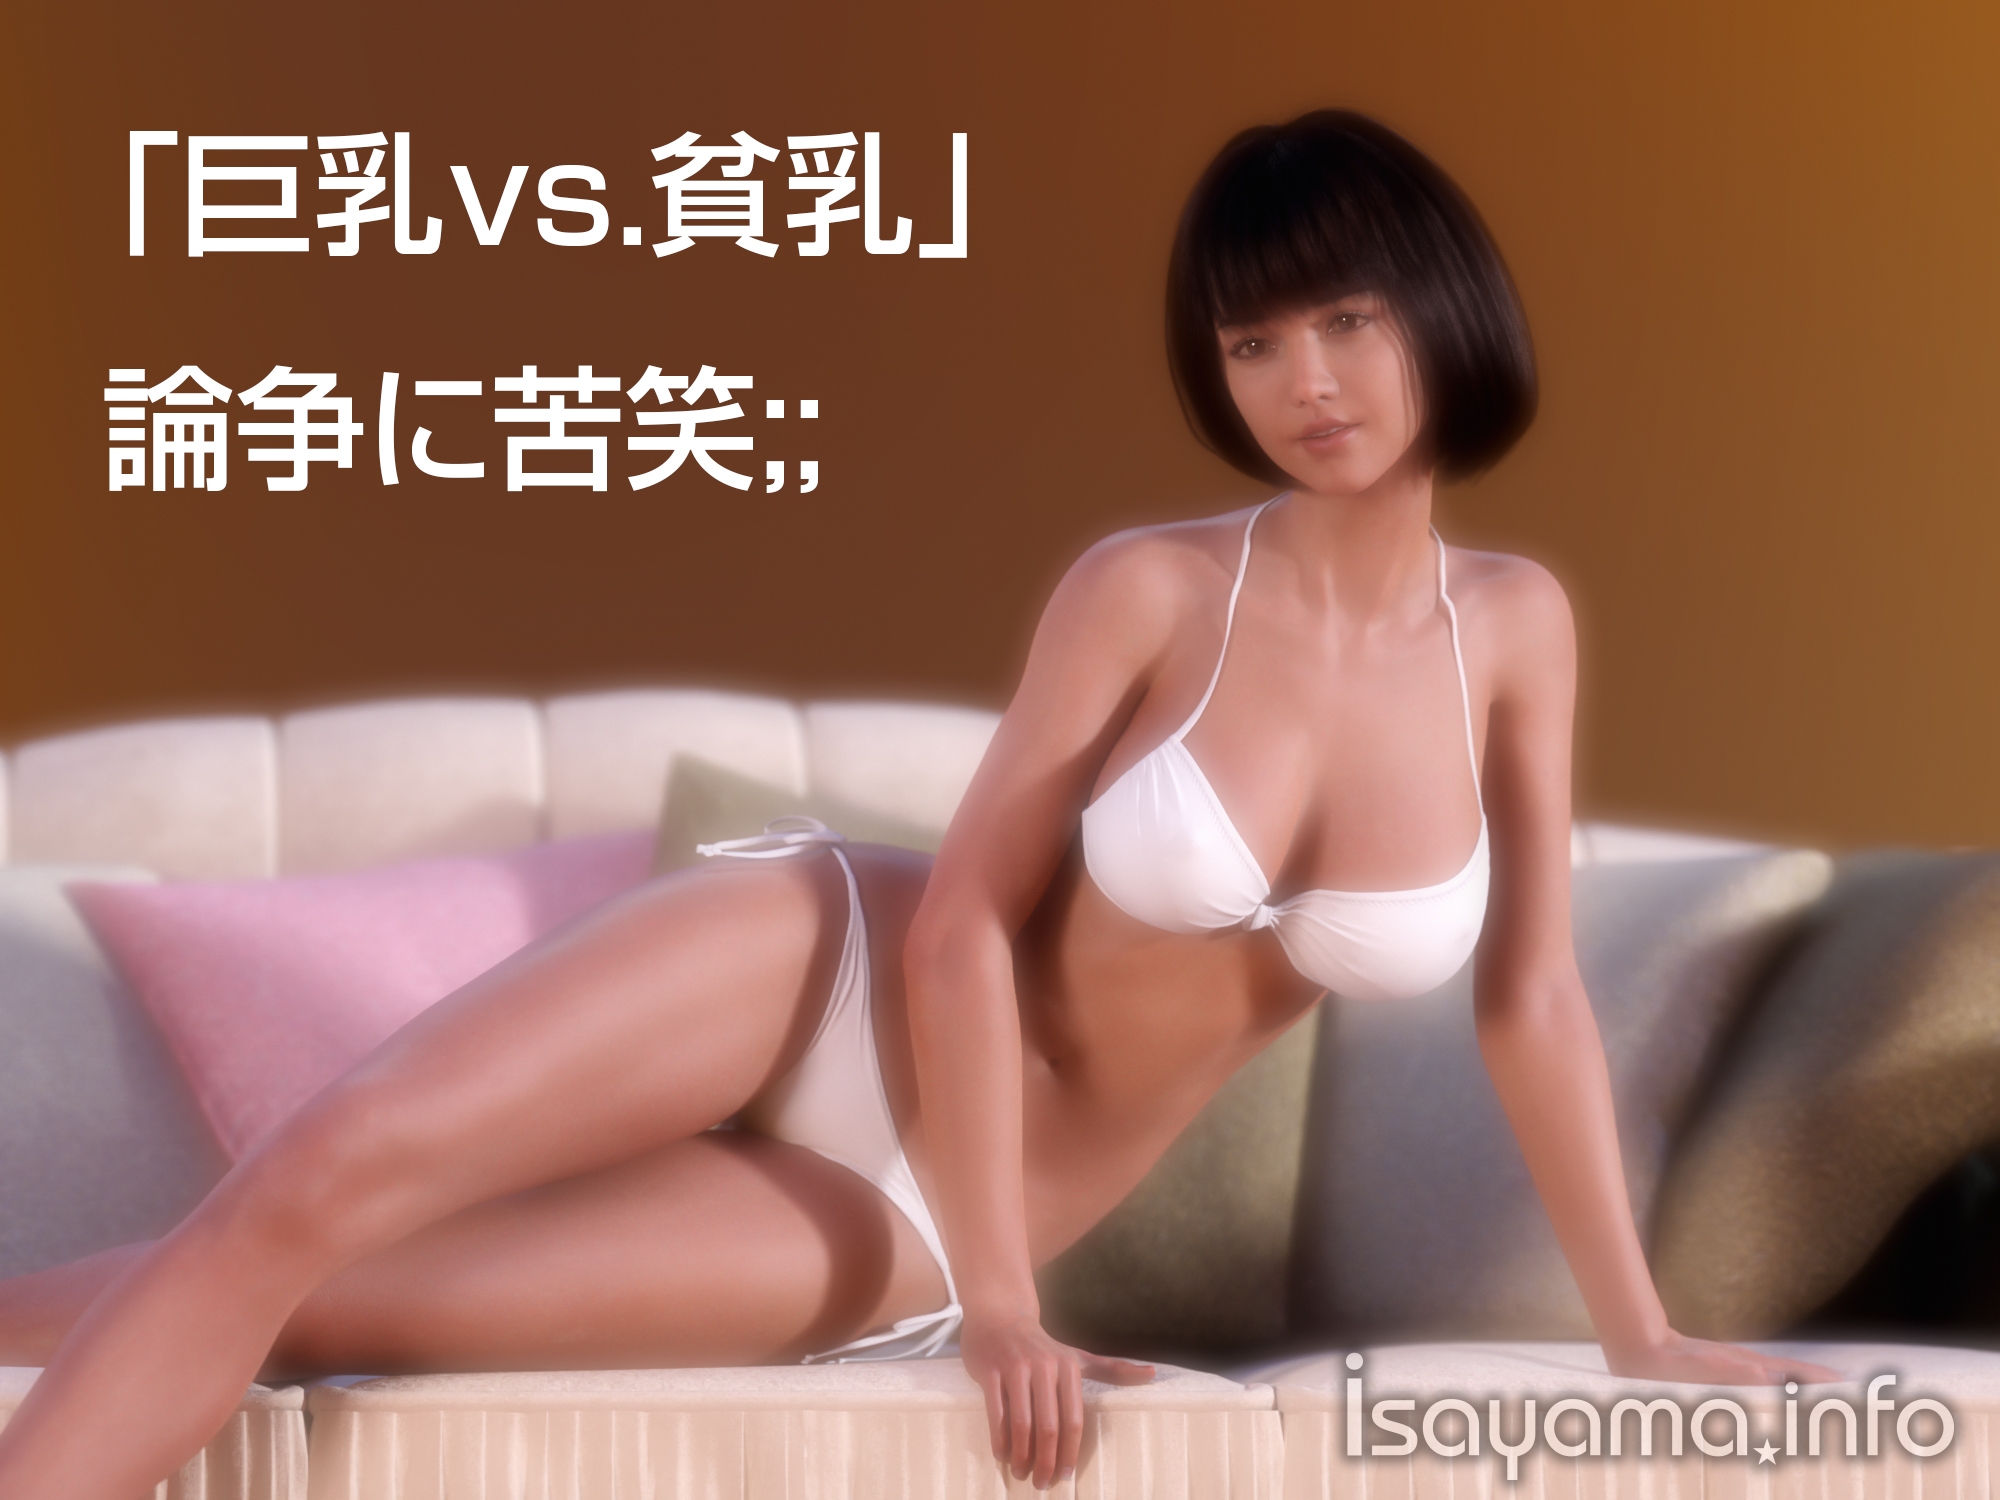 「巨乳vs.貧乳」論争に苦笑;;